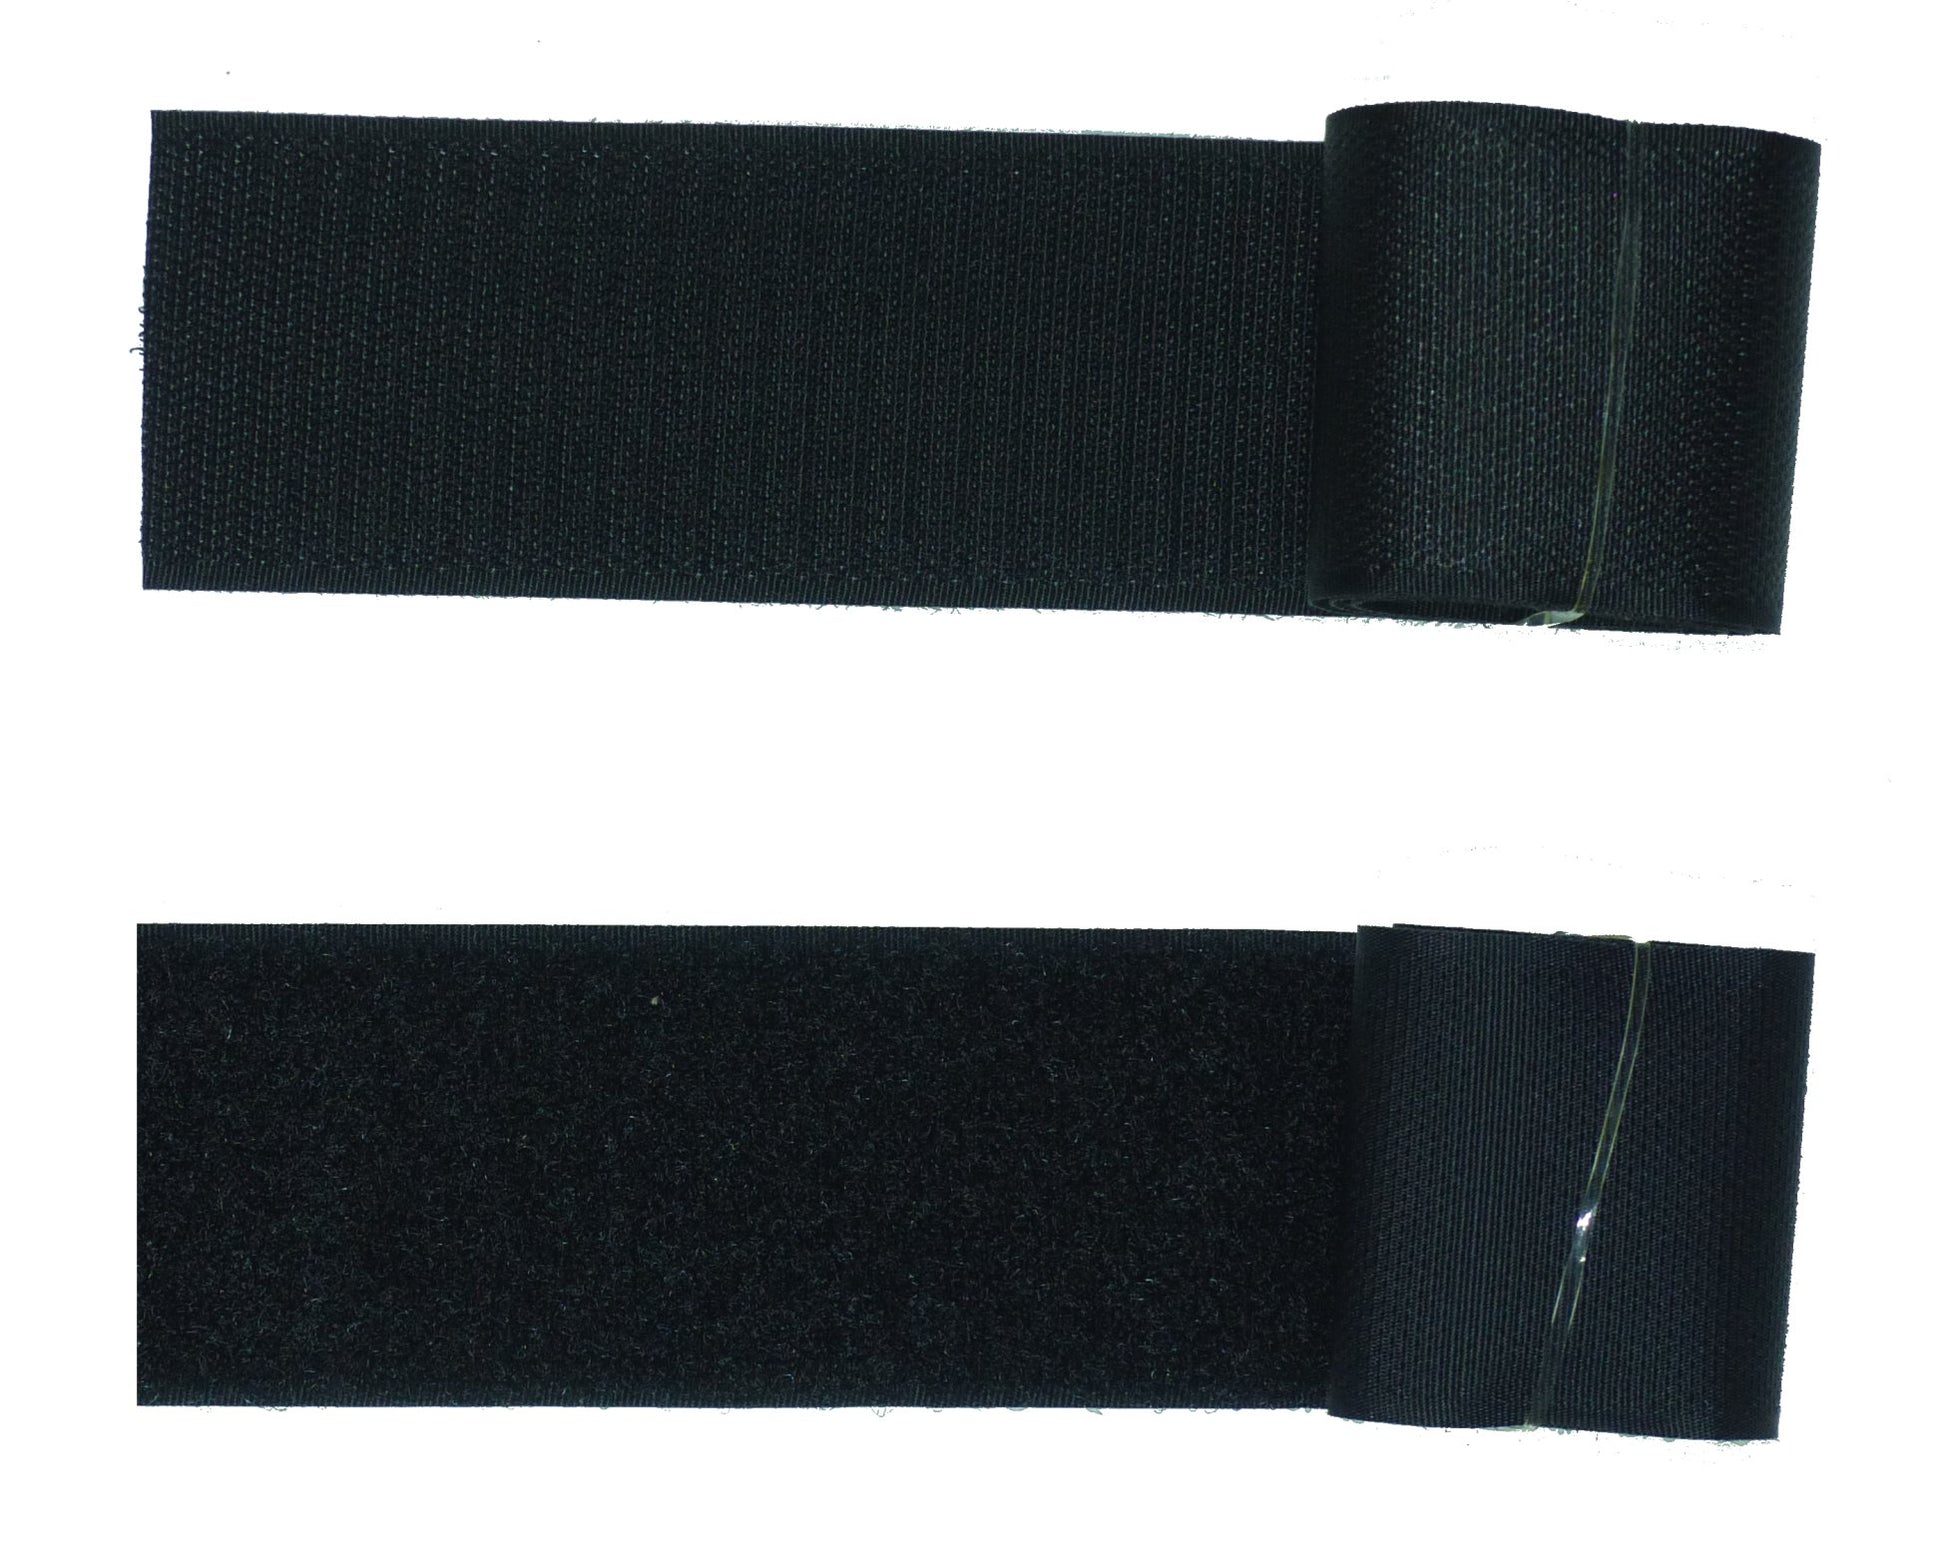 Benristraps 50mm sewable hook and loop tape in black